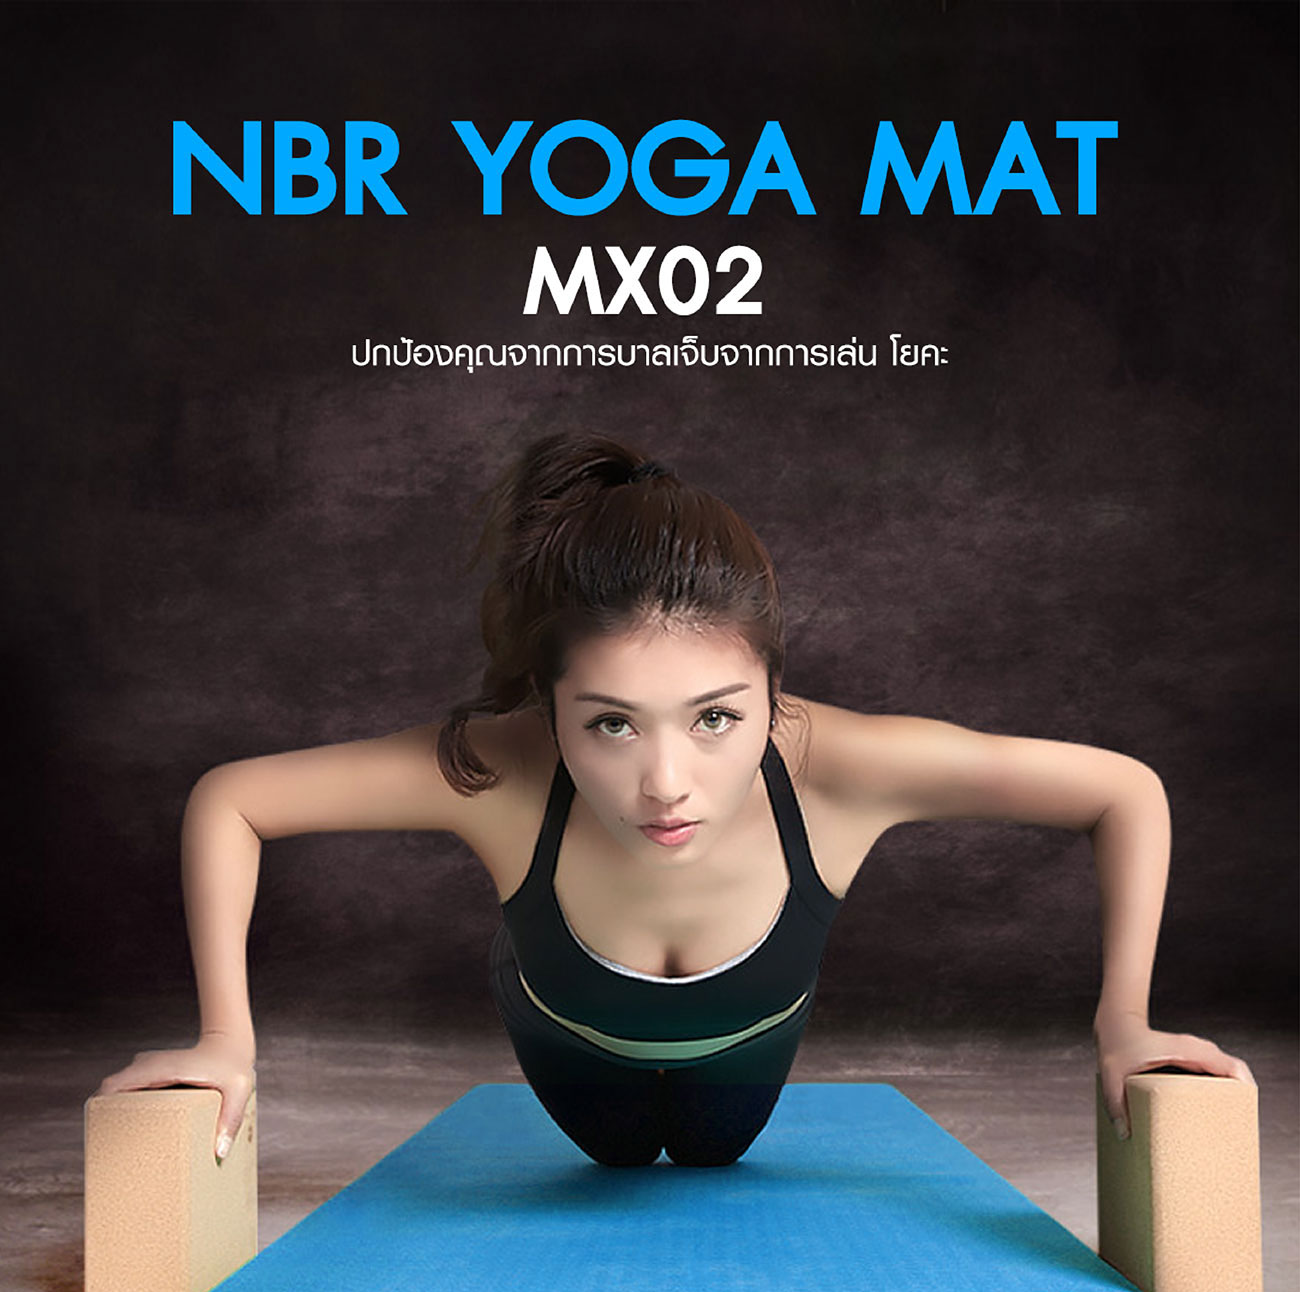 : NBR yoga mat MX02